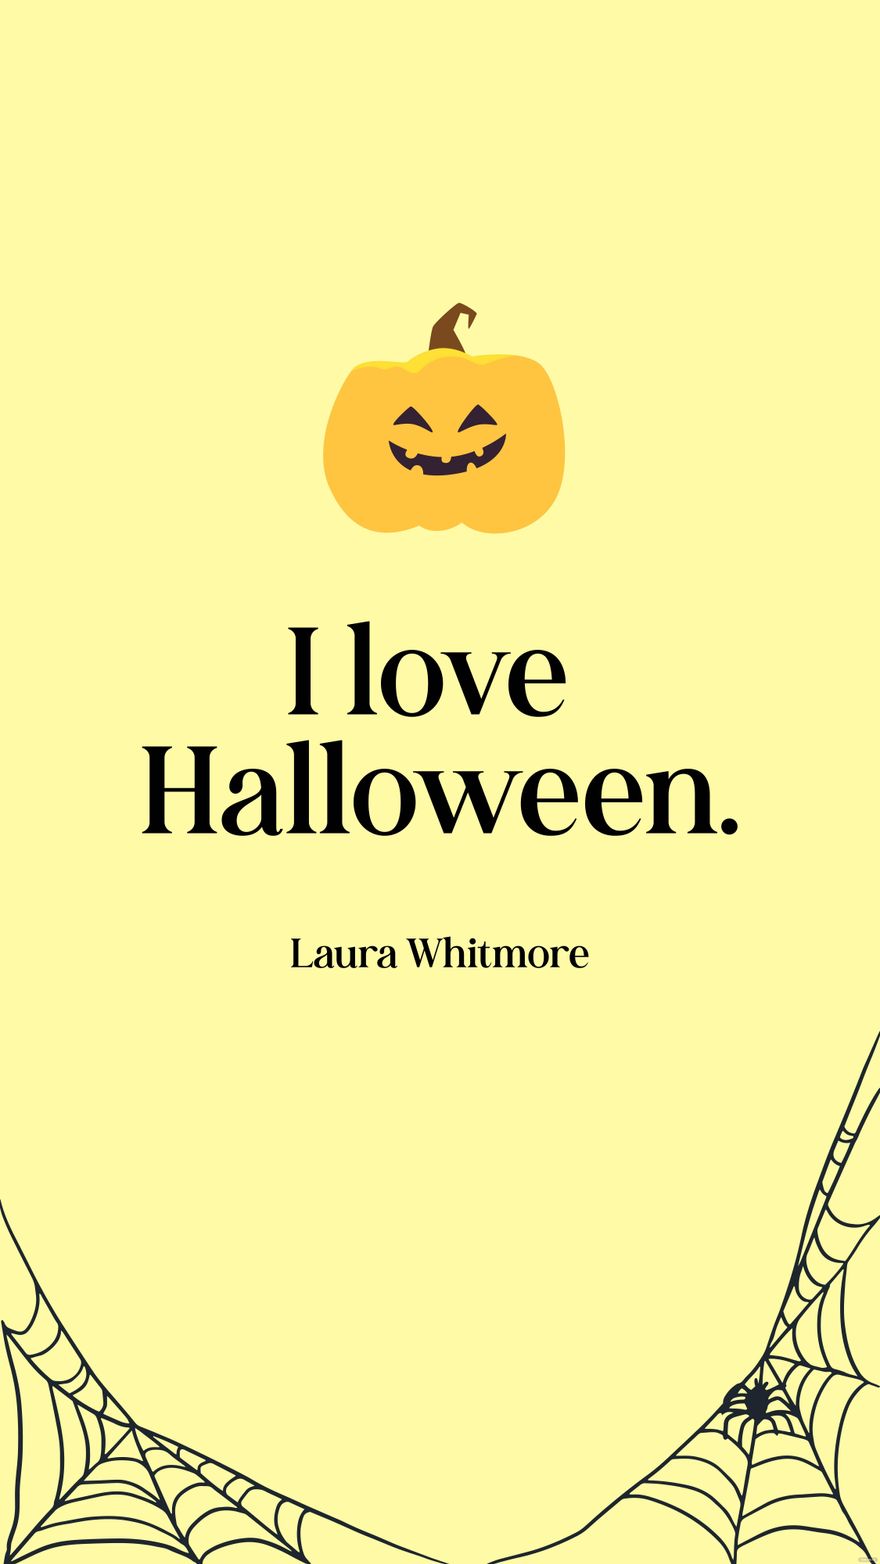 Free Laura Whitmore- I love Halloween.  in JPG